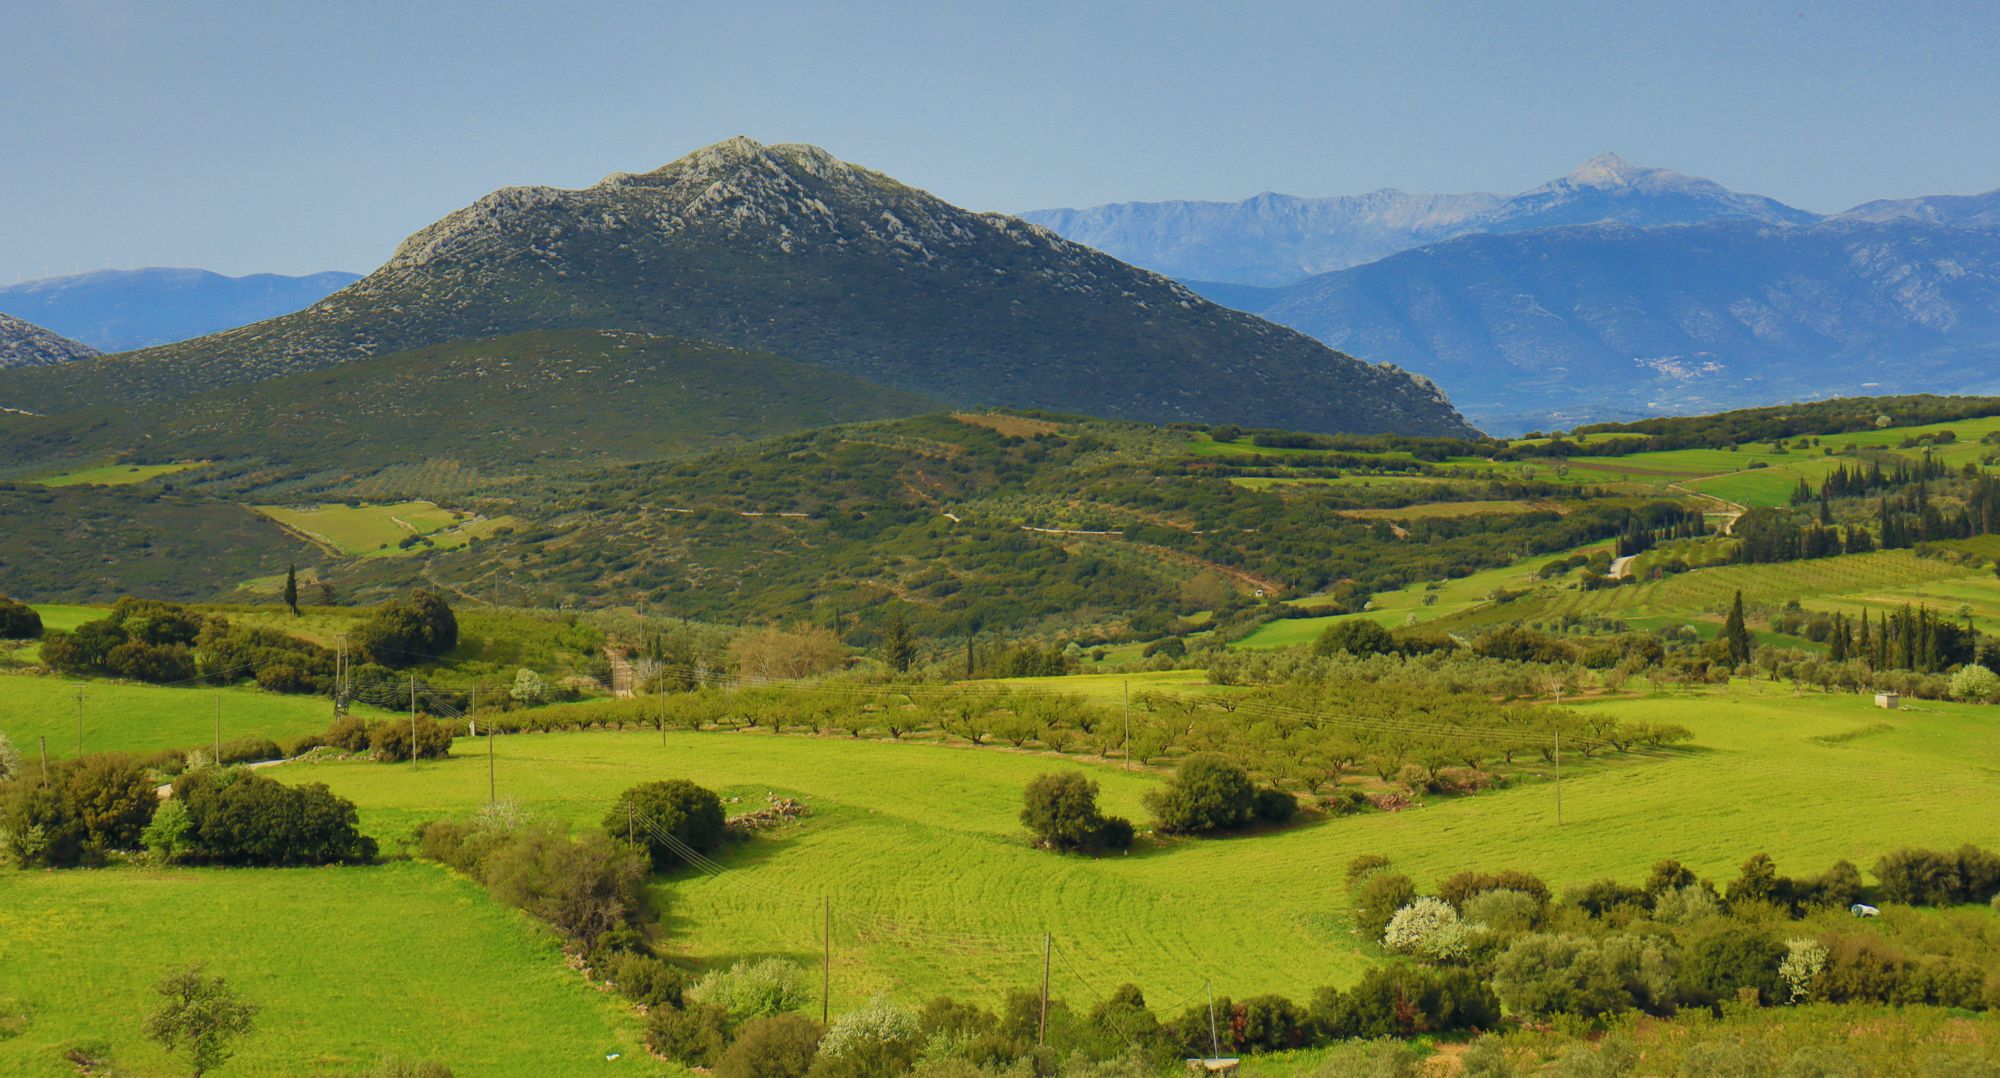 The view form the top of the Profitis Ilias peak